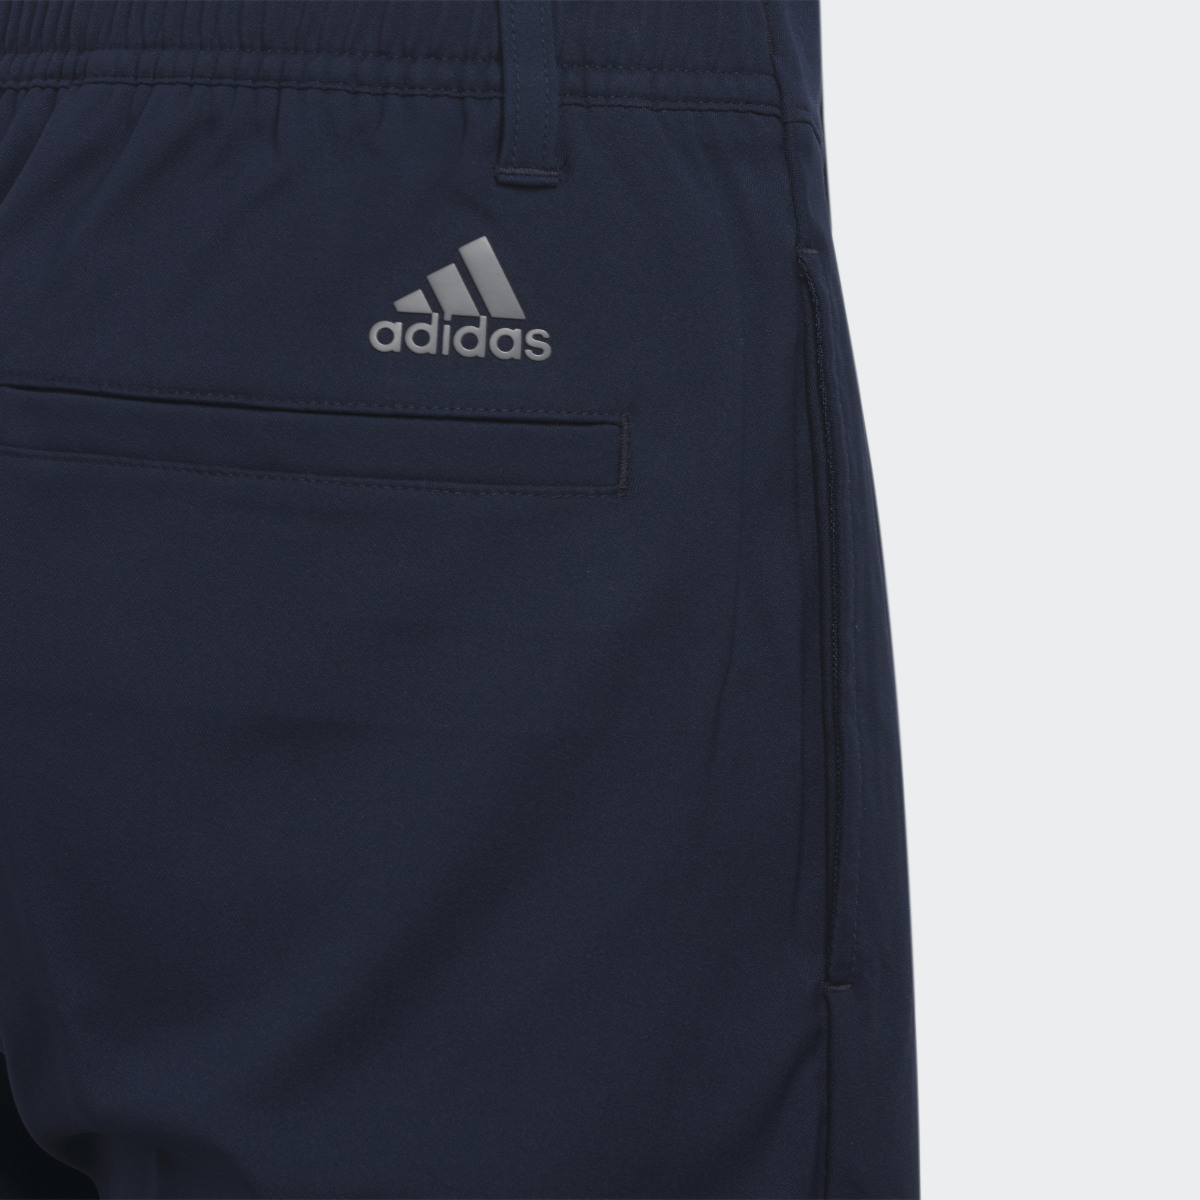 Adidas Ultimate365 Adjustable Golf Shorts. 5